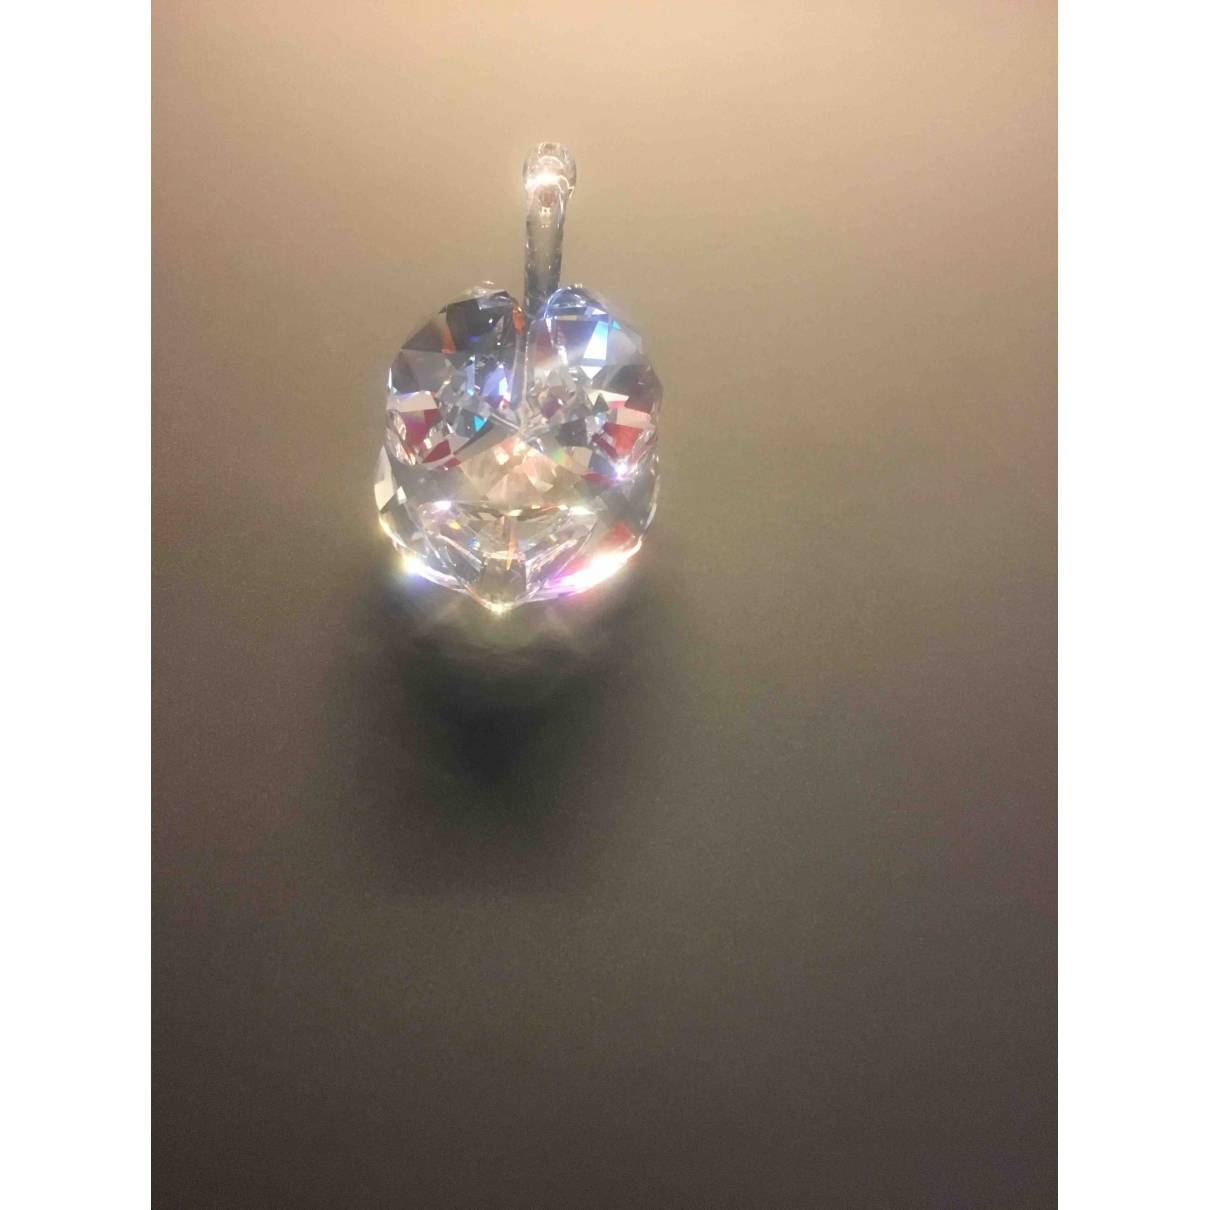 Buy Swarovski Crystal home decor online